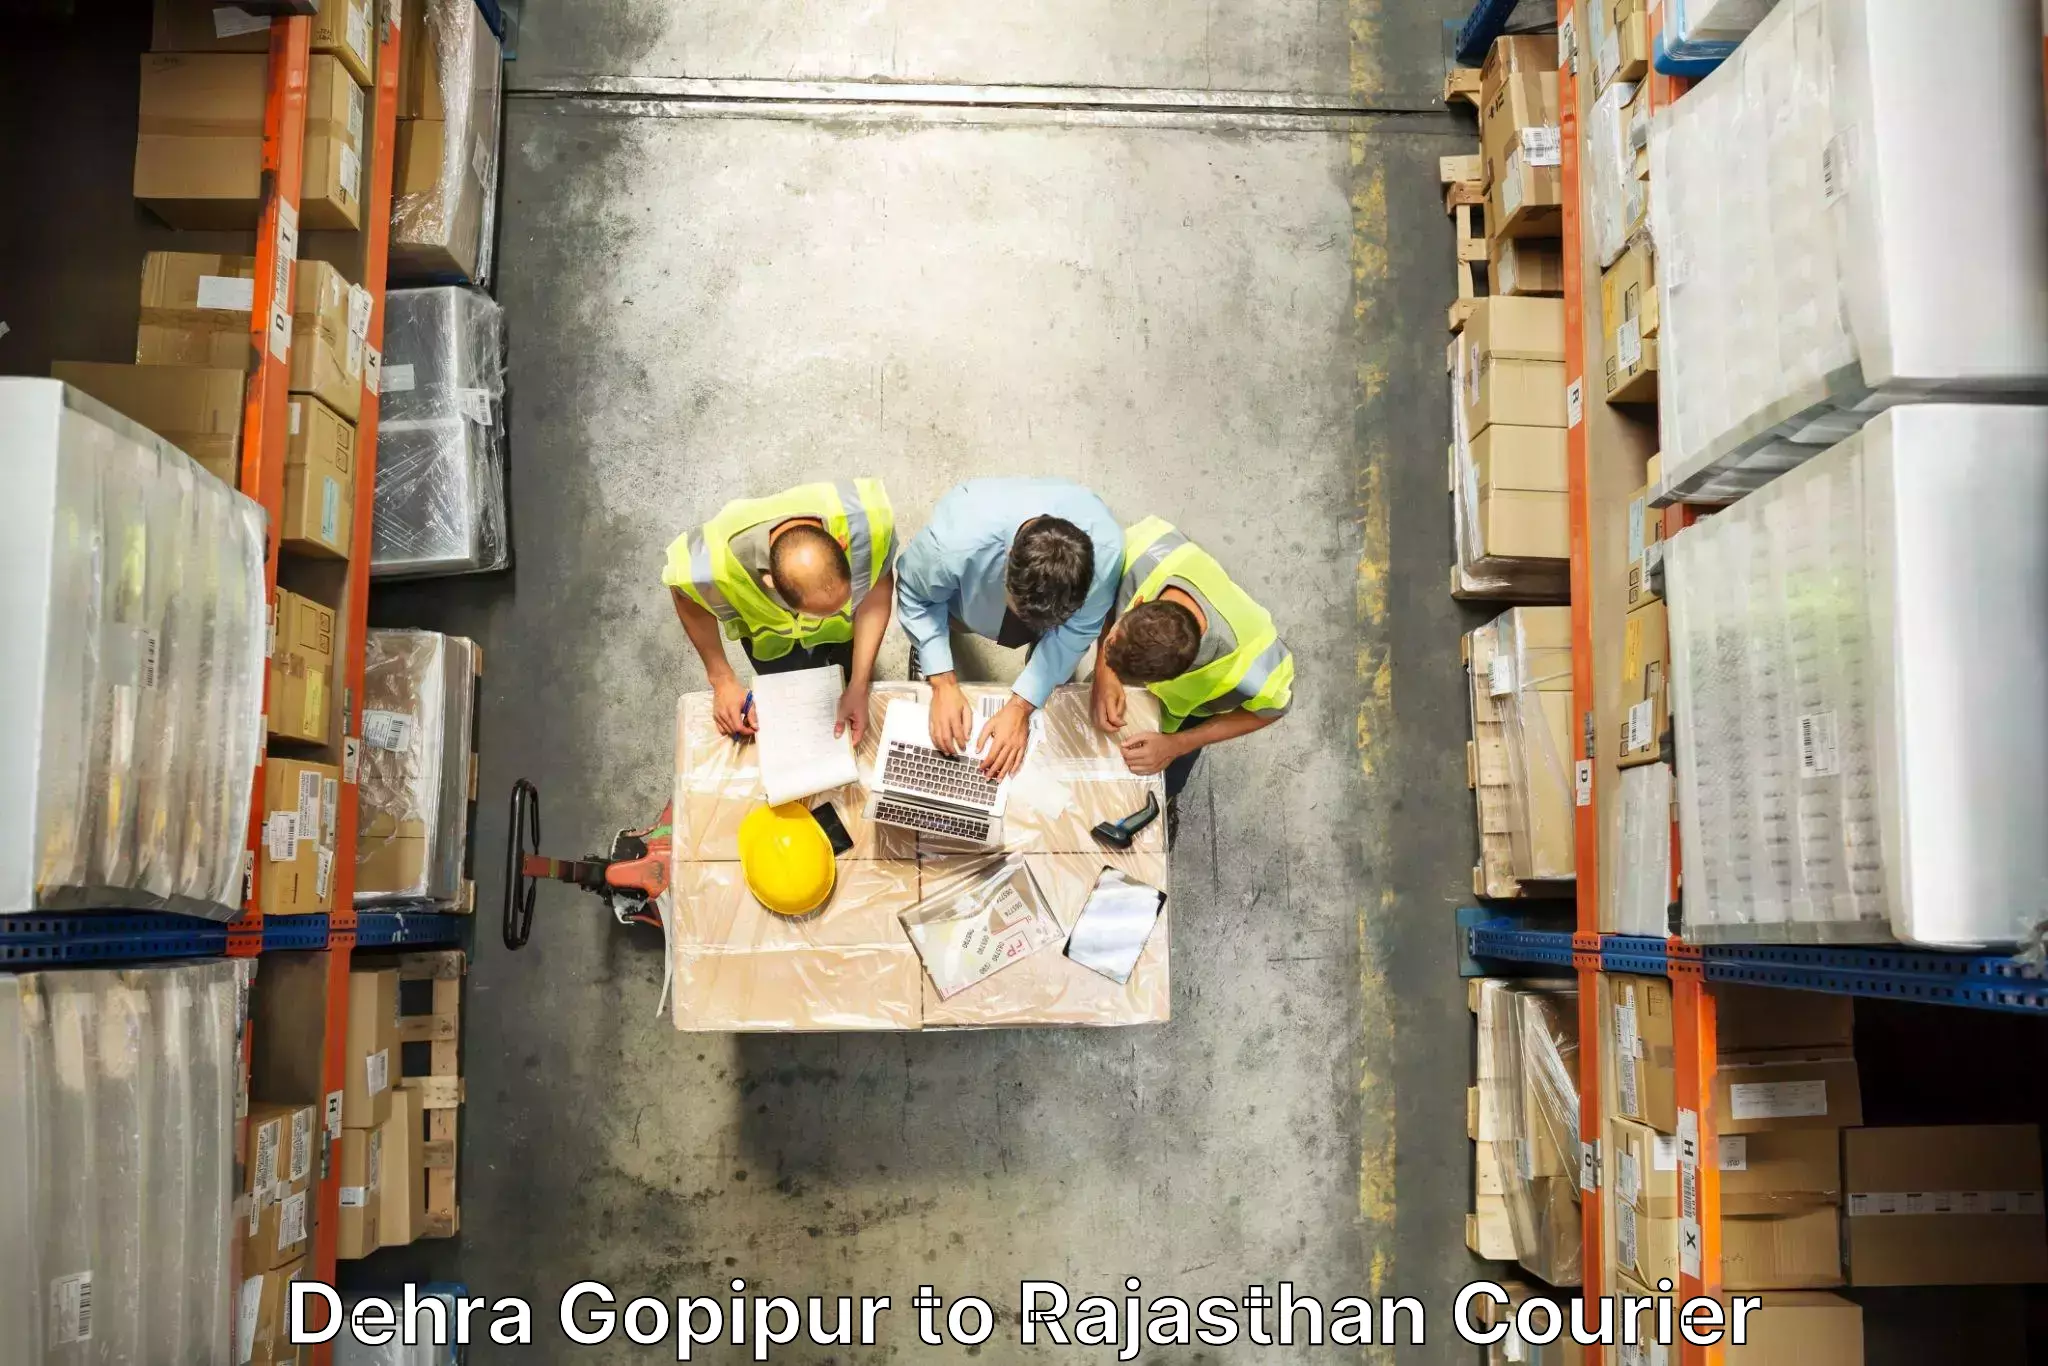 Furniture relocation experts Dehra Gopipur to Ajmer